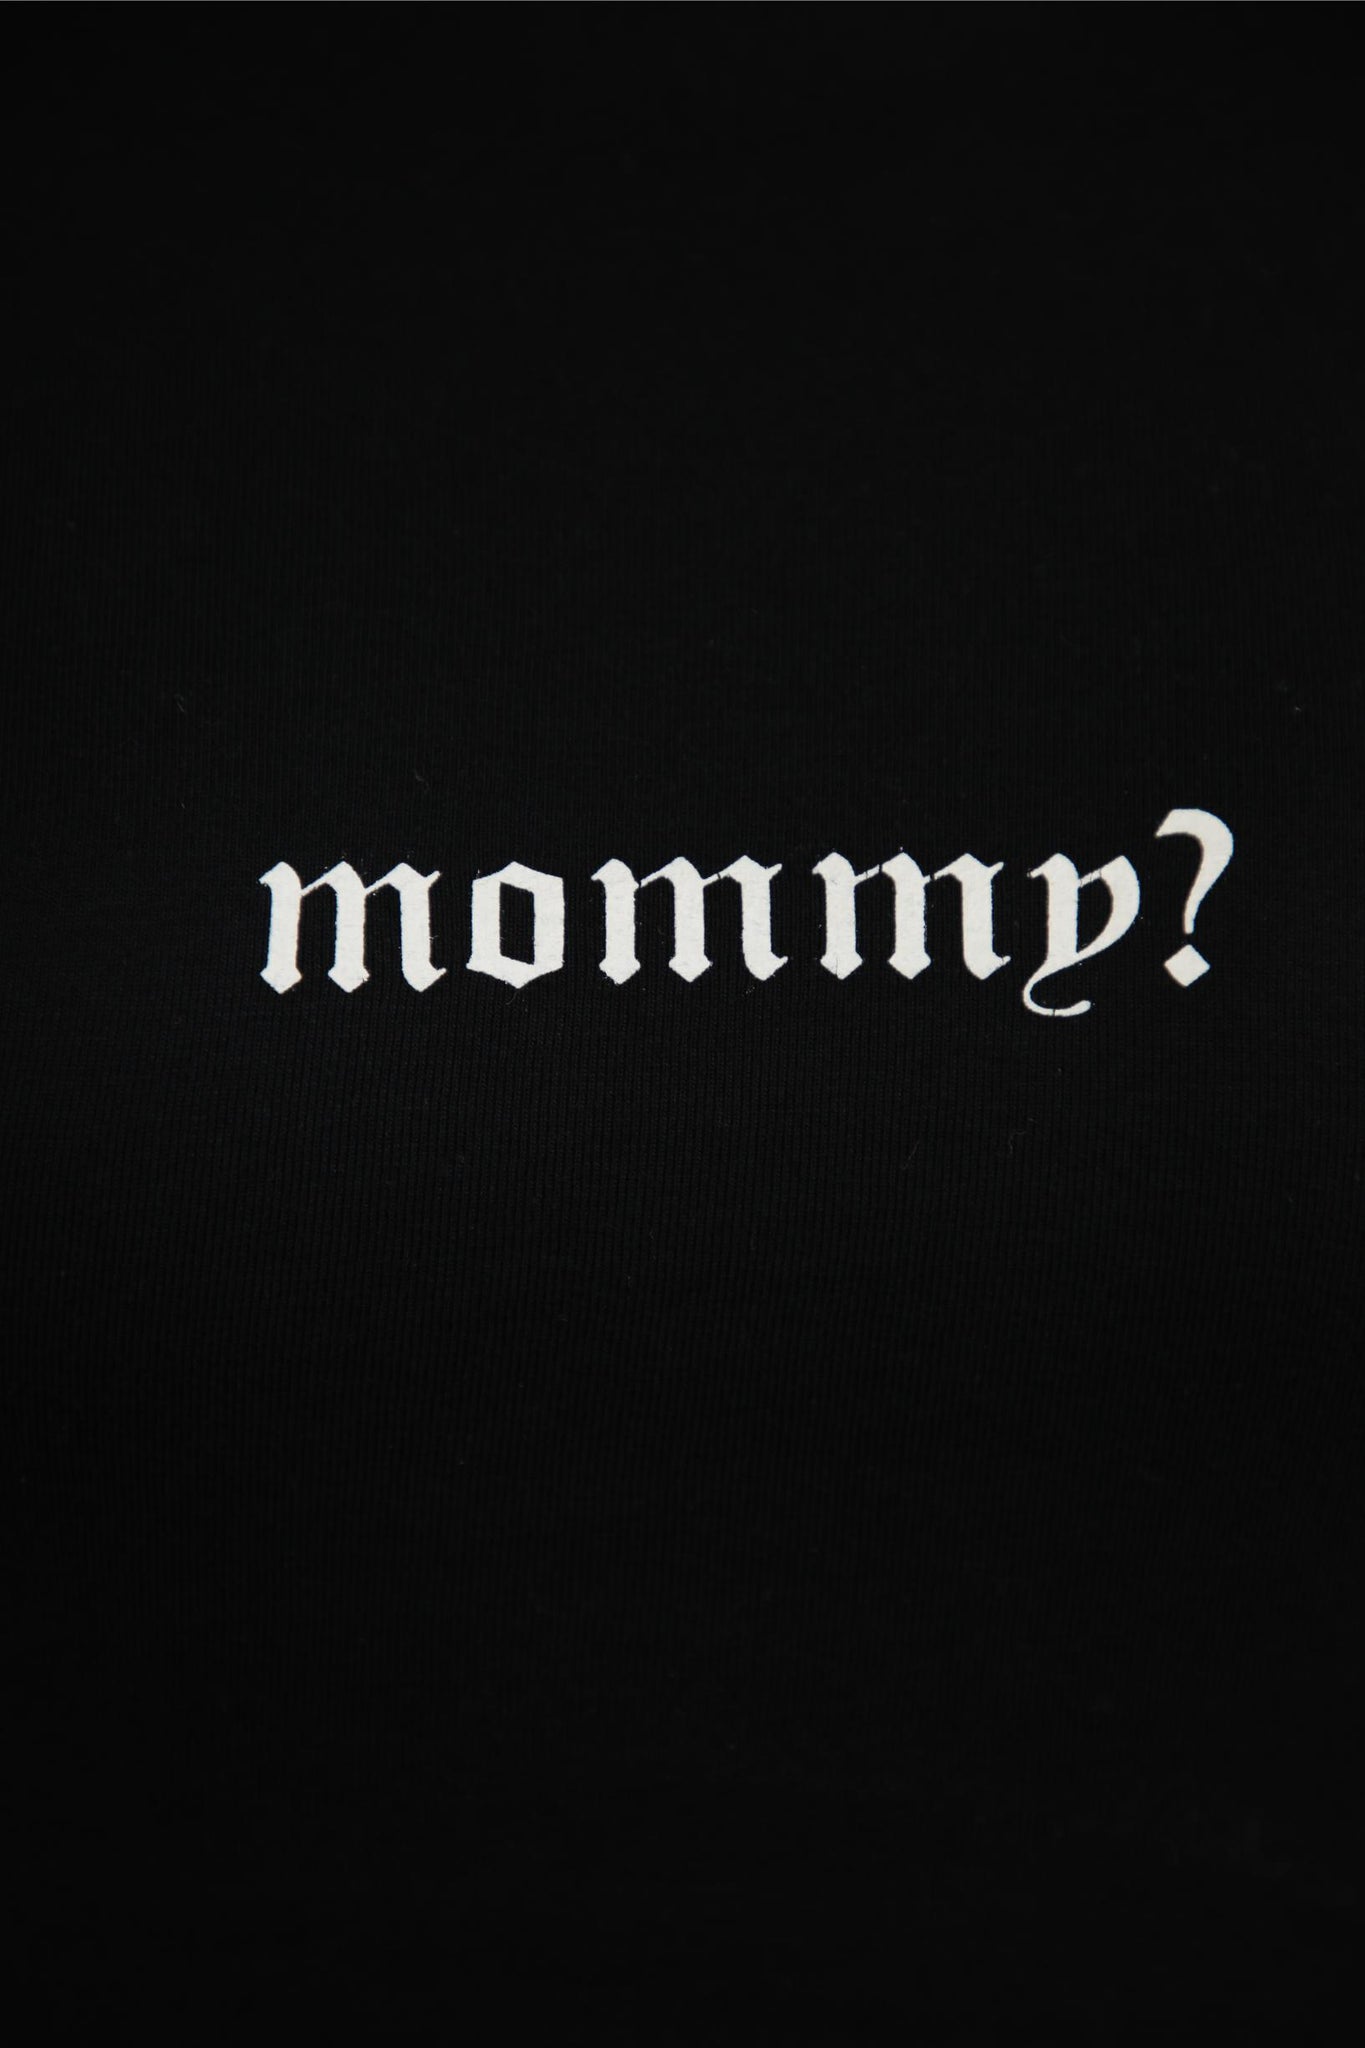 "Mommy?" Muscle Tank